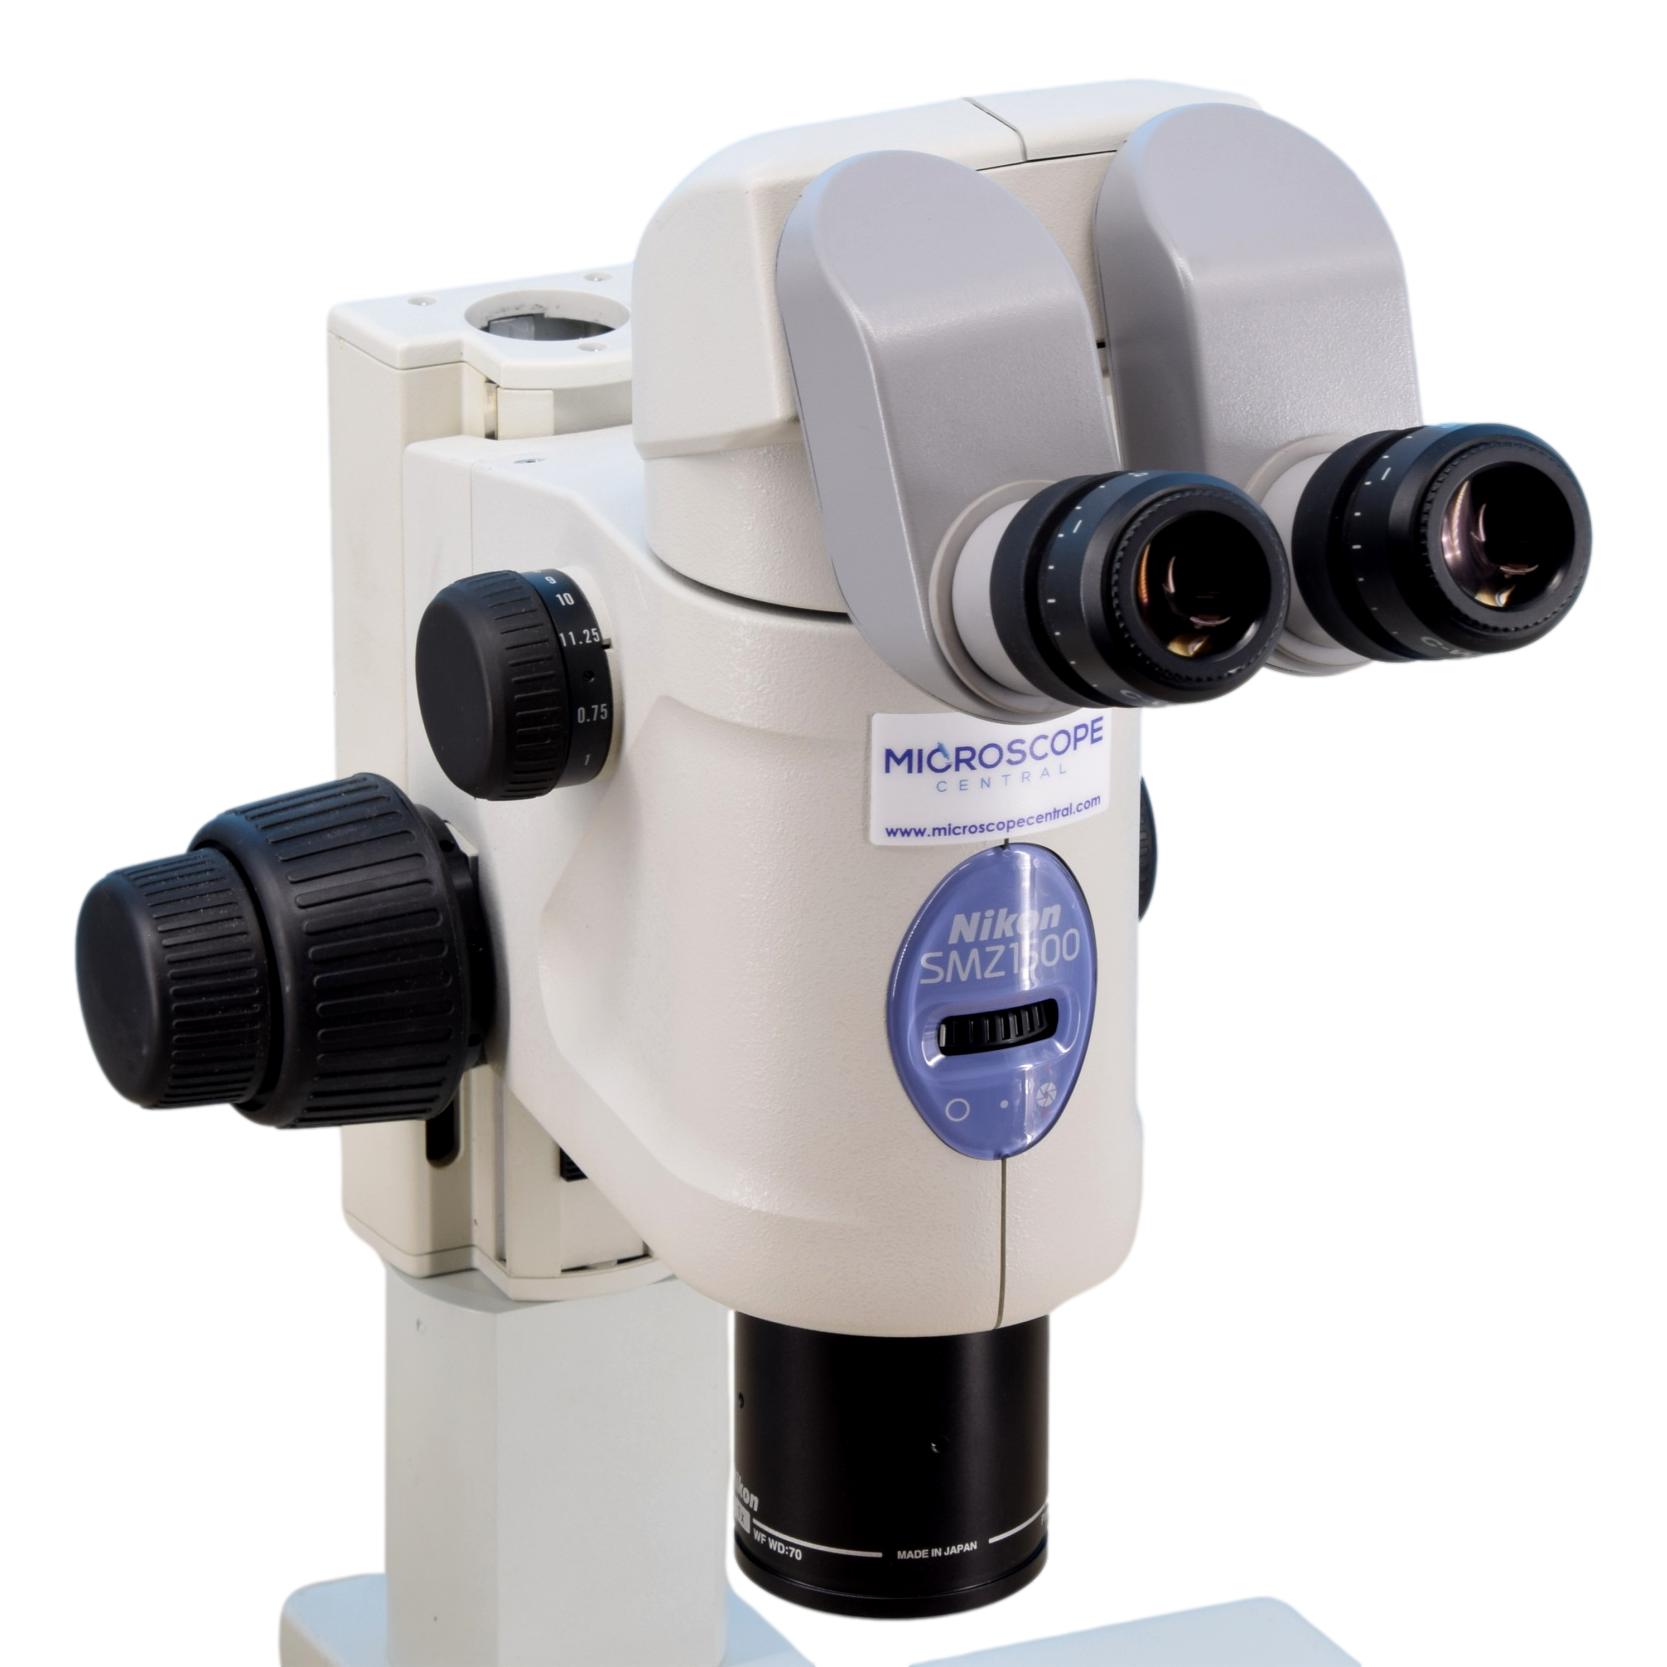 Nikon SMZ1500 Stereo Microscope On Post Stand 7.5x - 112.5x